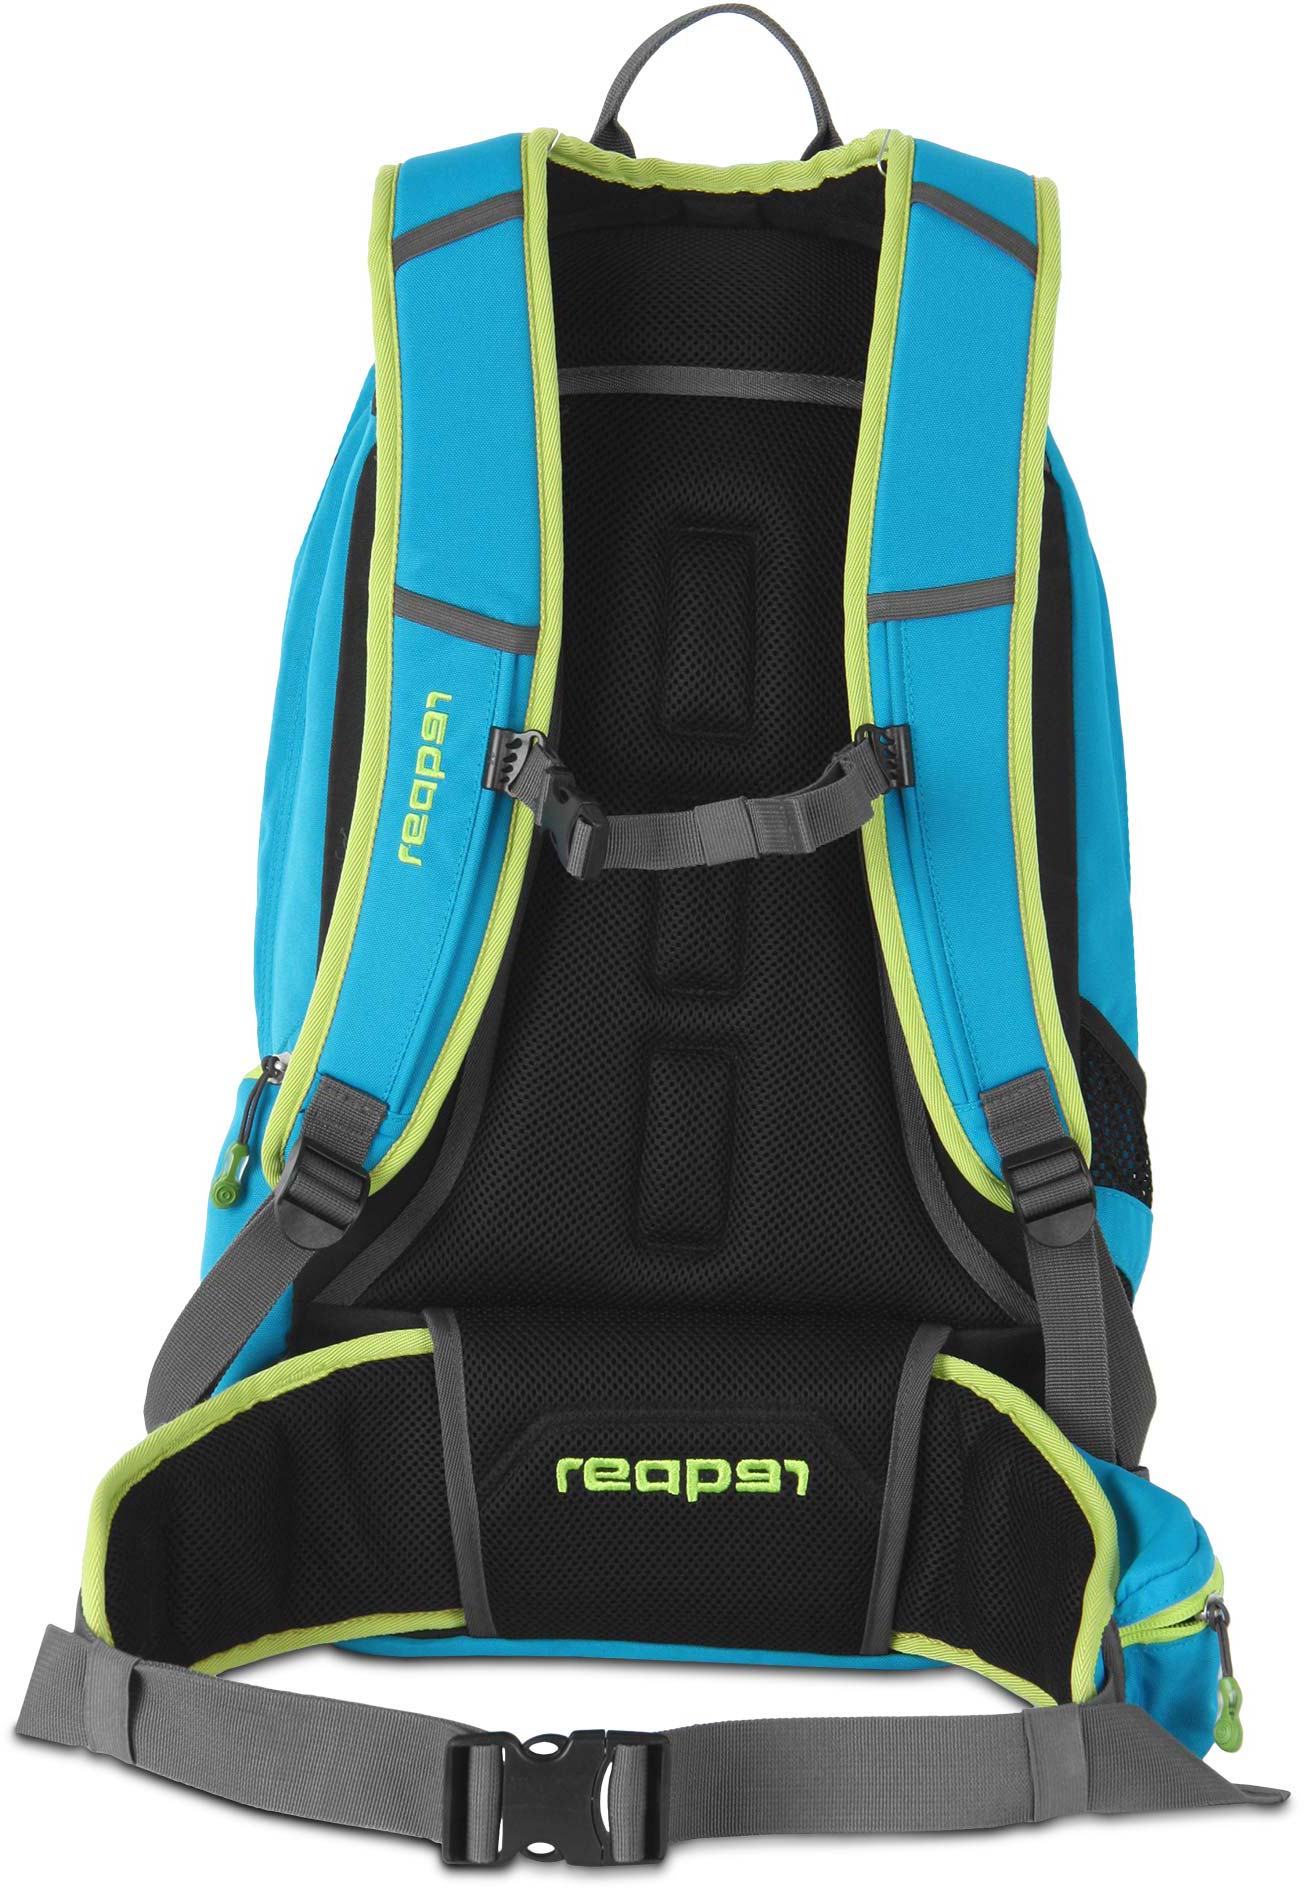 Snowboard backpack